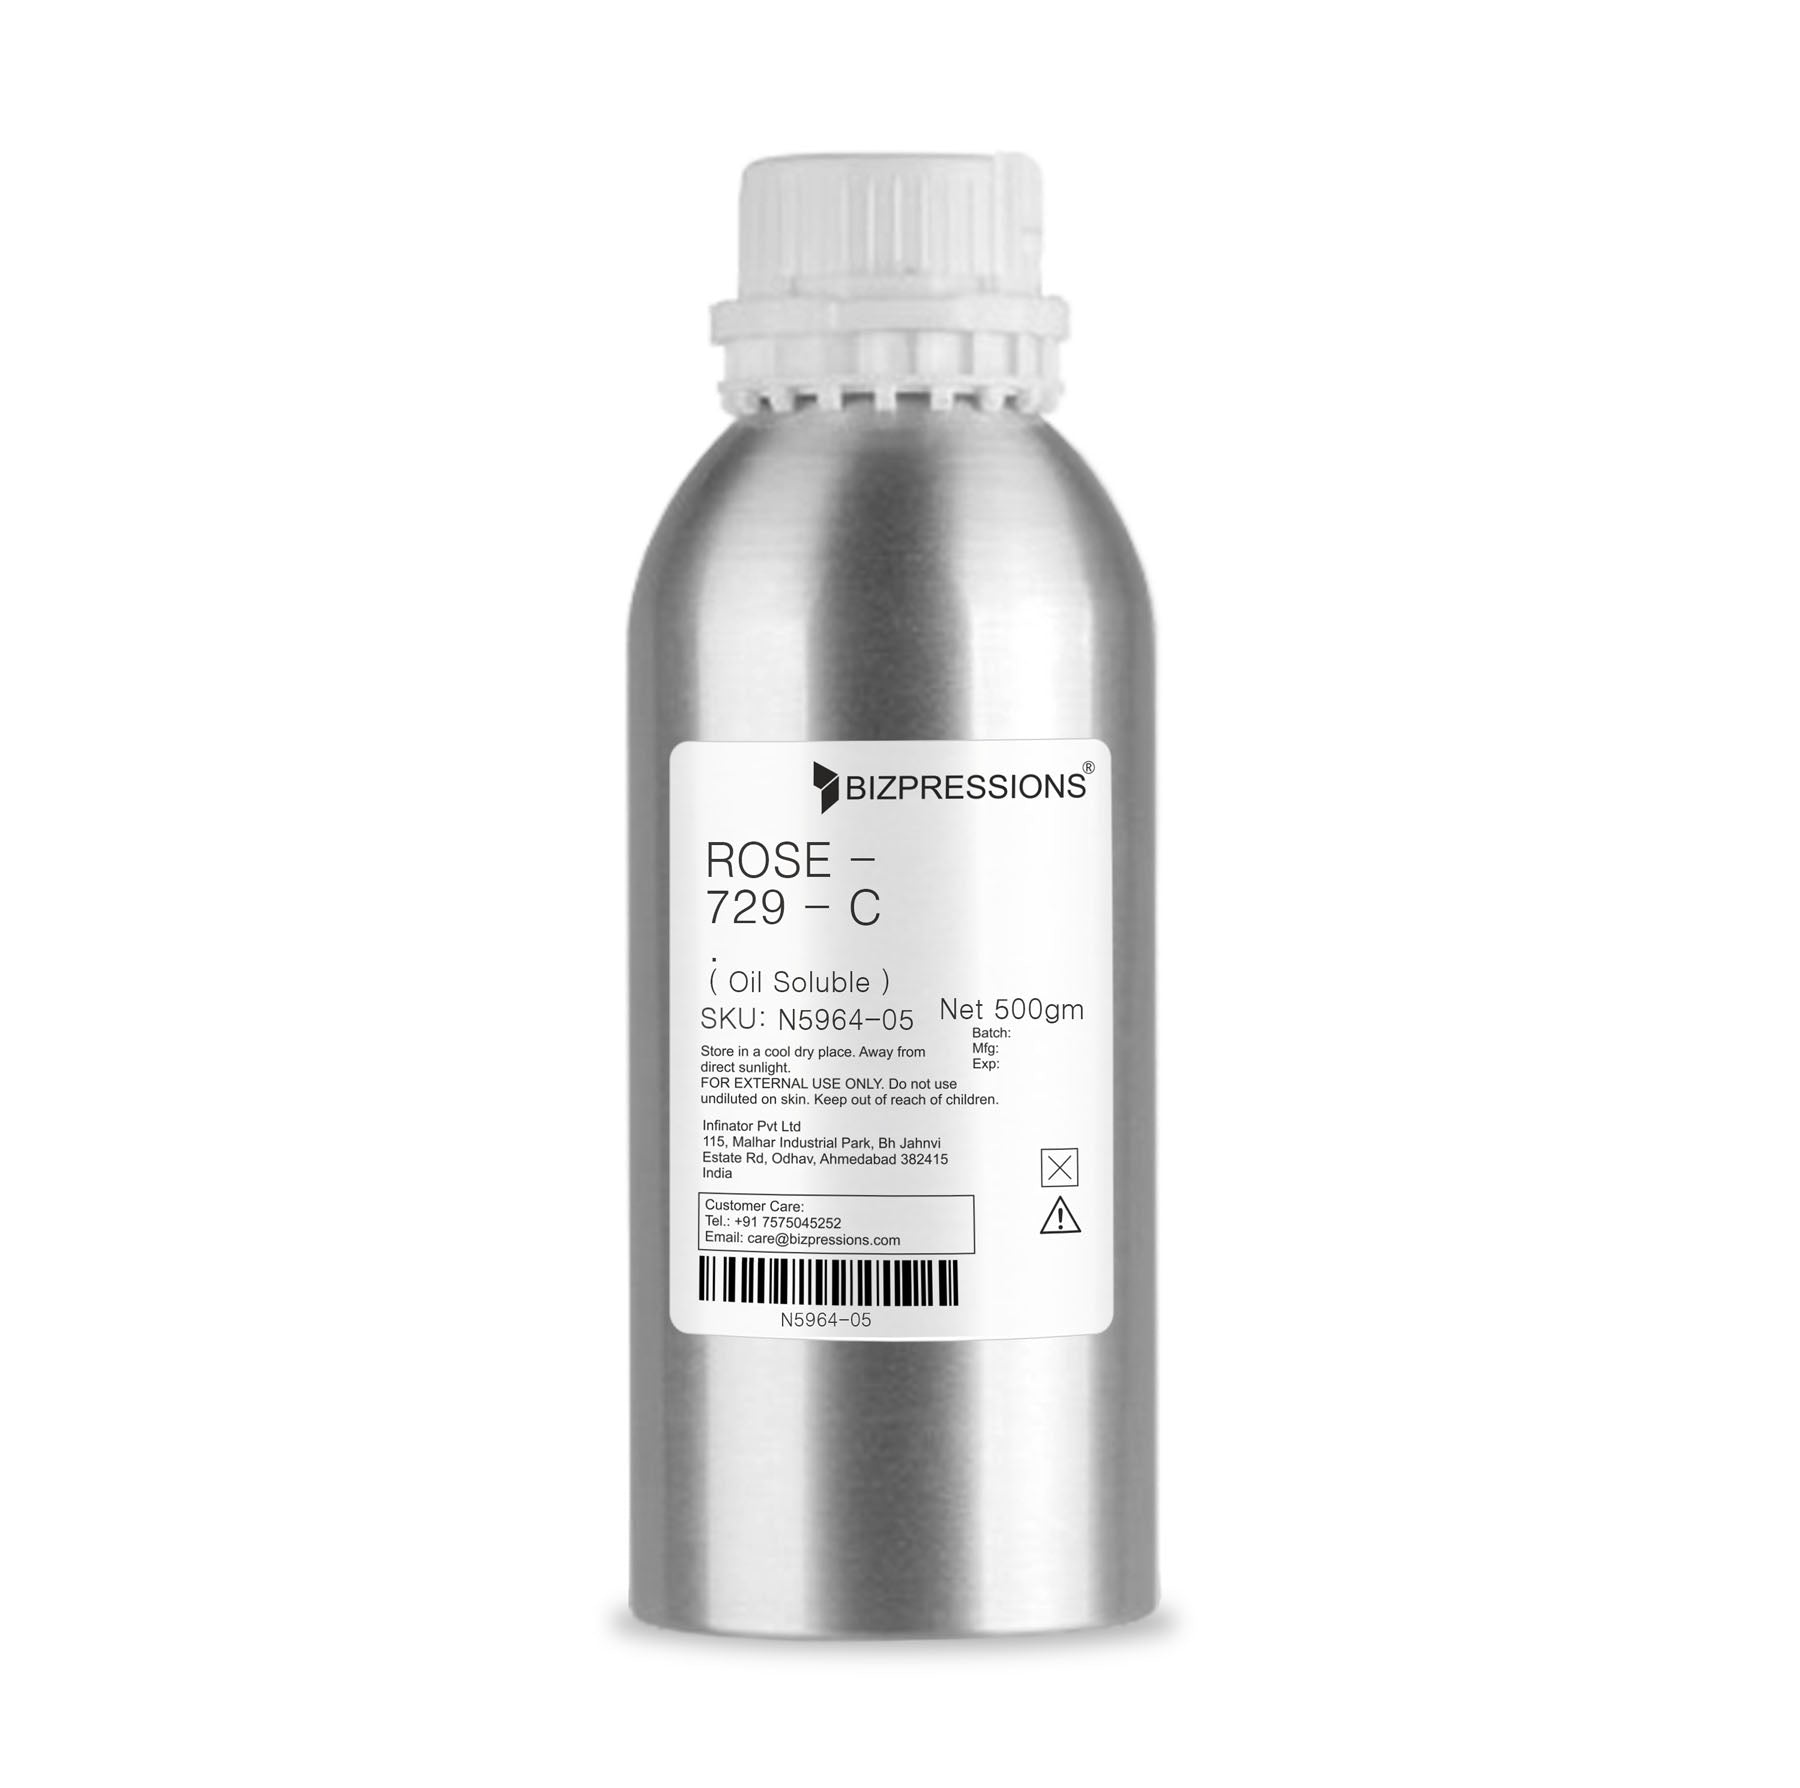 ROSE - 729 - C - Fragrance ( Oil Soluble ) - 500 gm